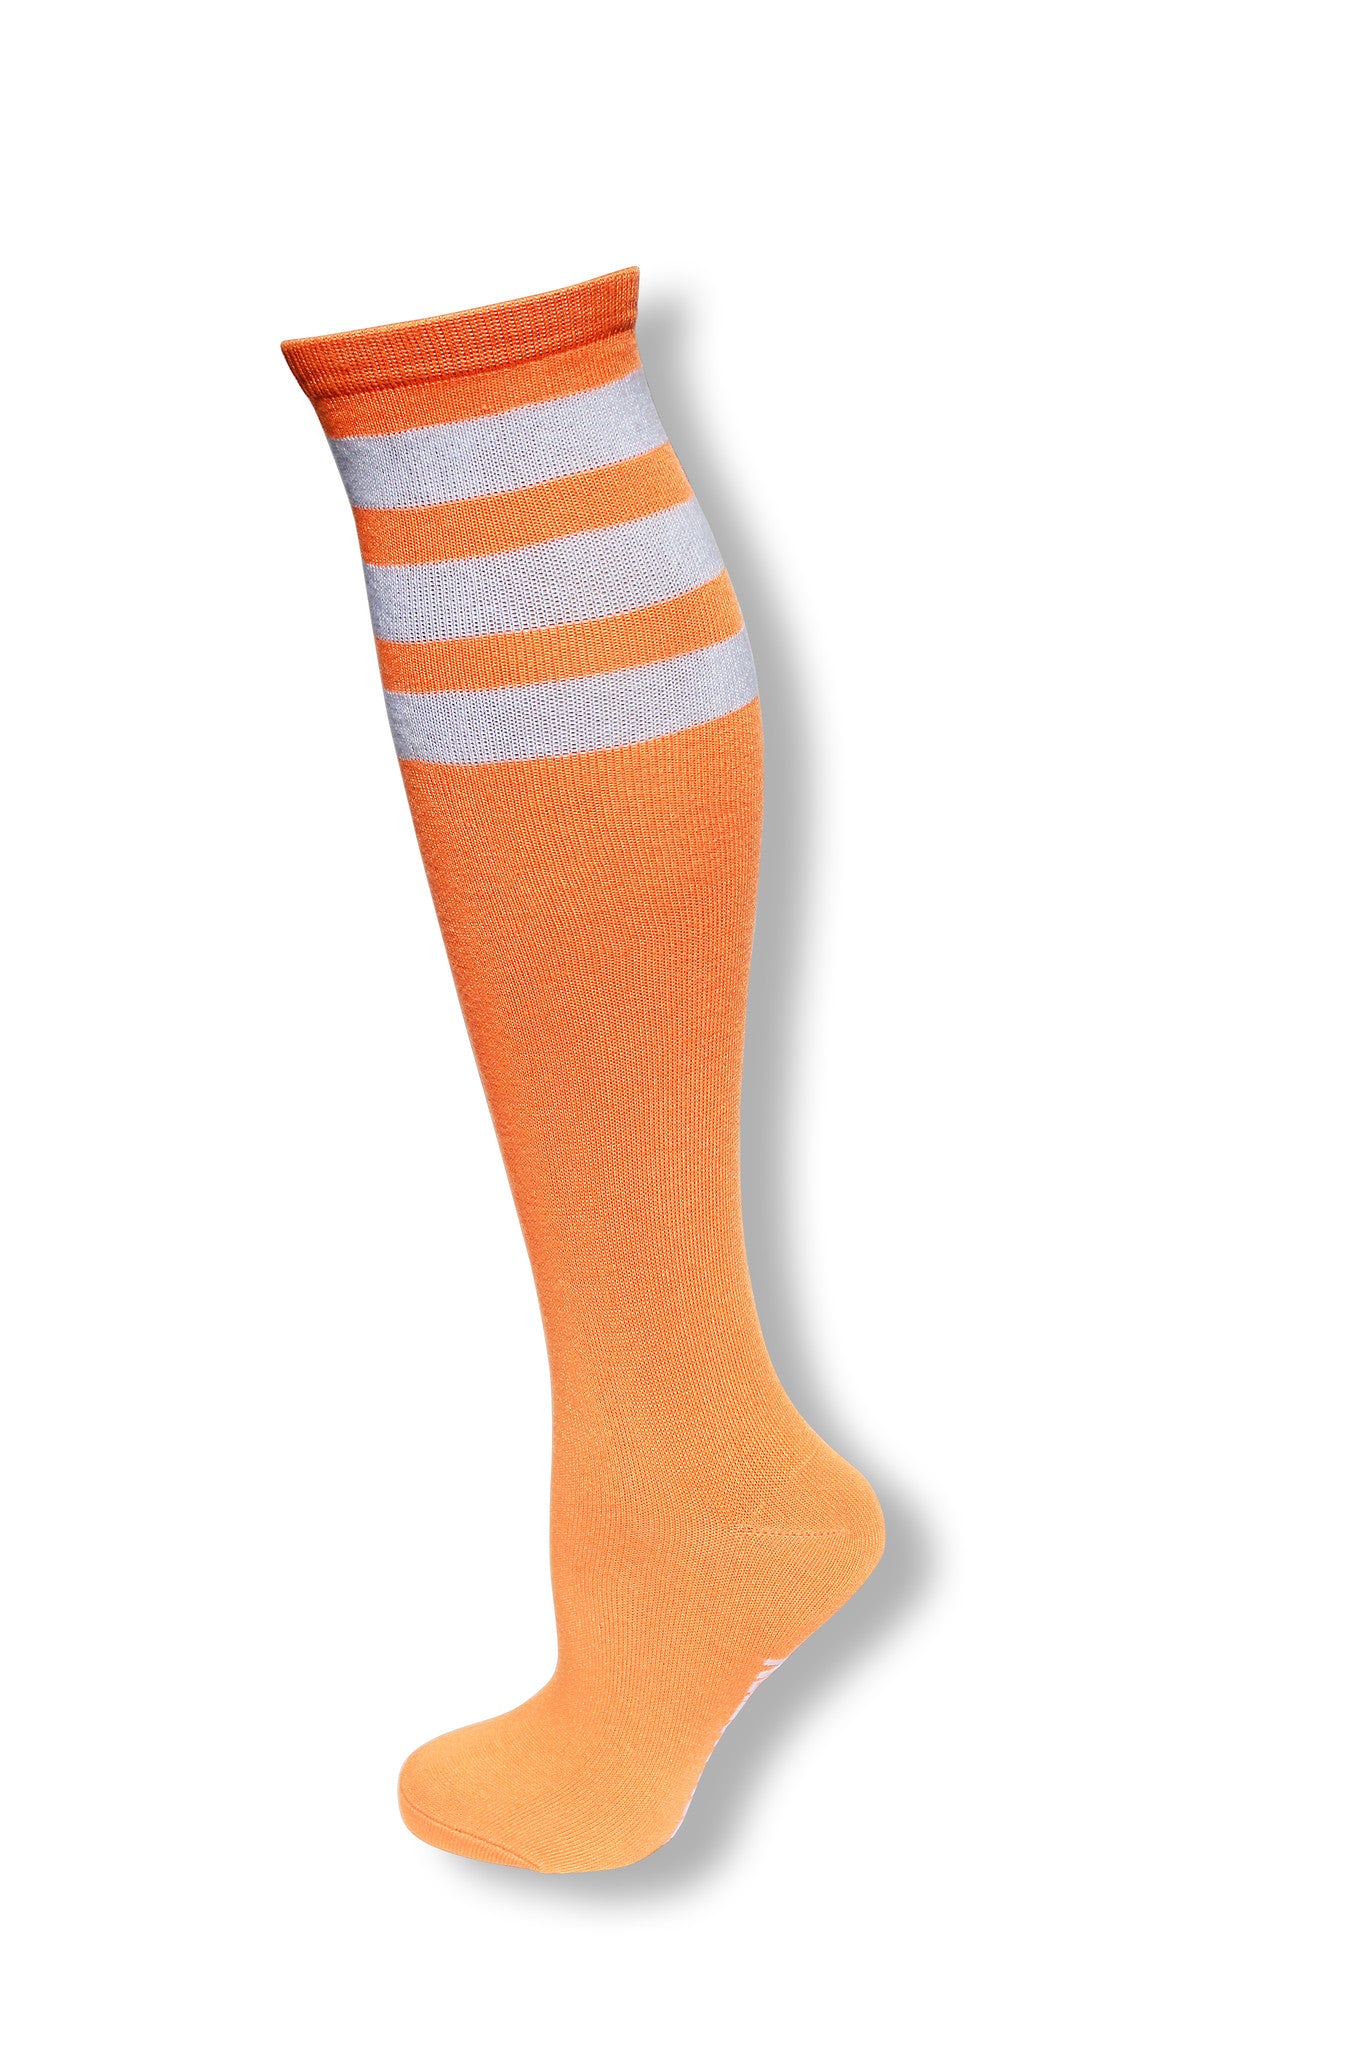 Neon Orange with White Stripes Knee High Sock